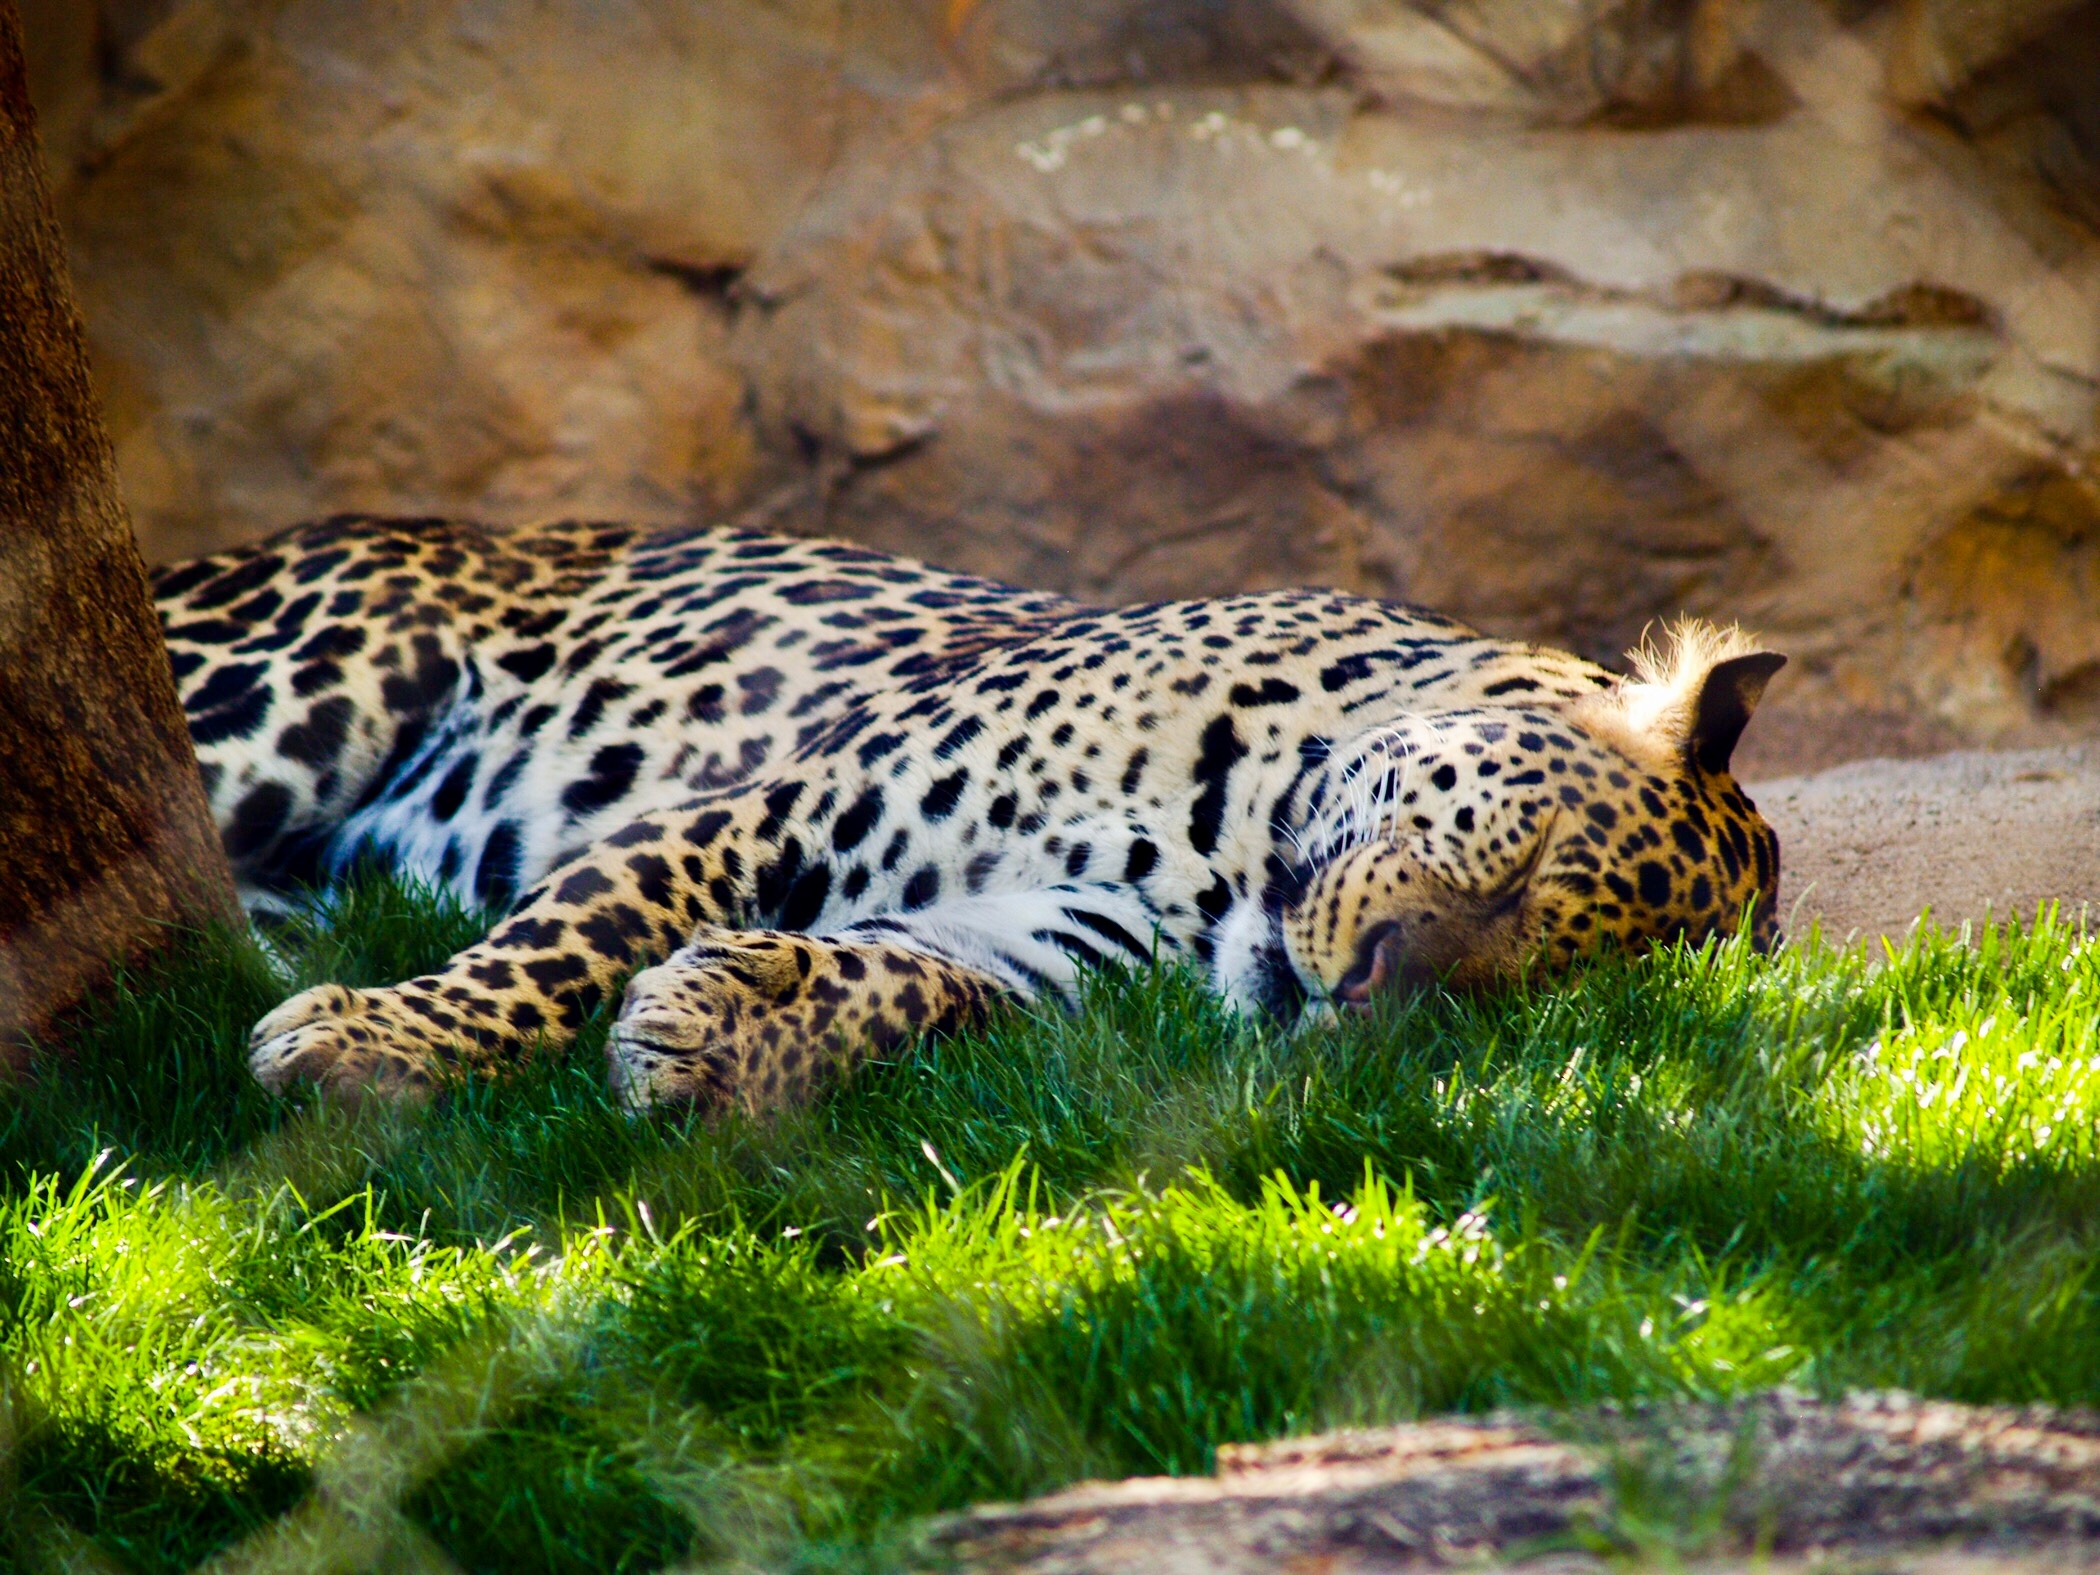 A beautiful sleeping leopard at the Siegfried & Roy's Secret Garden And Dolphin Habitat.